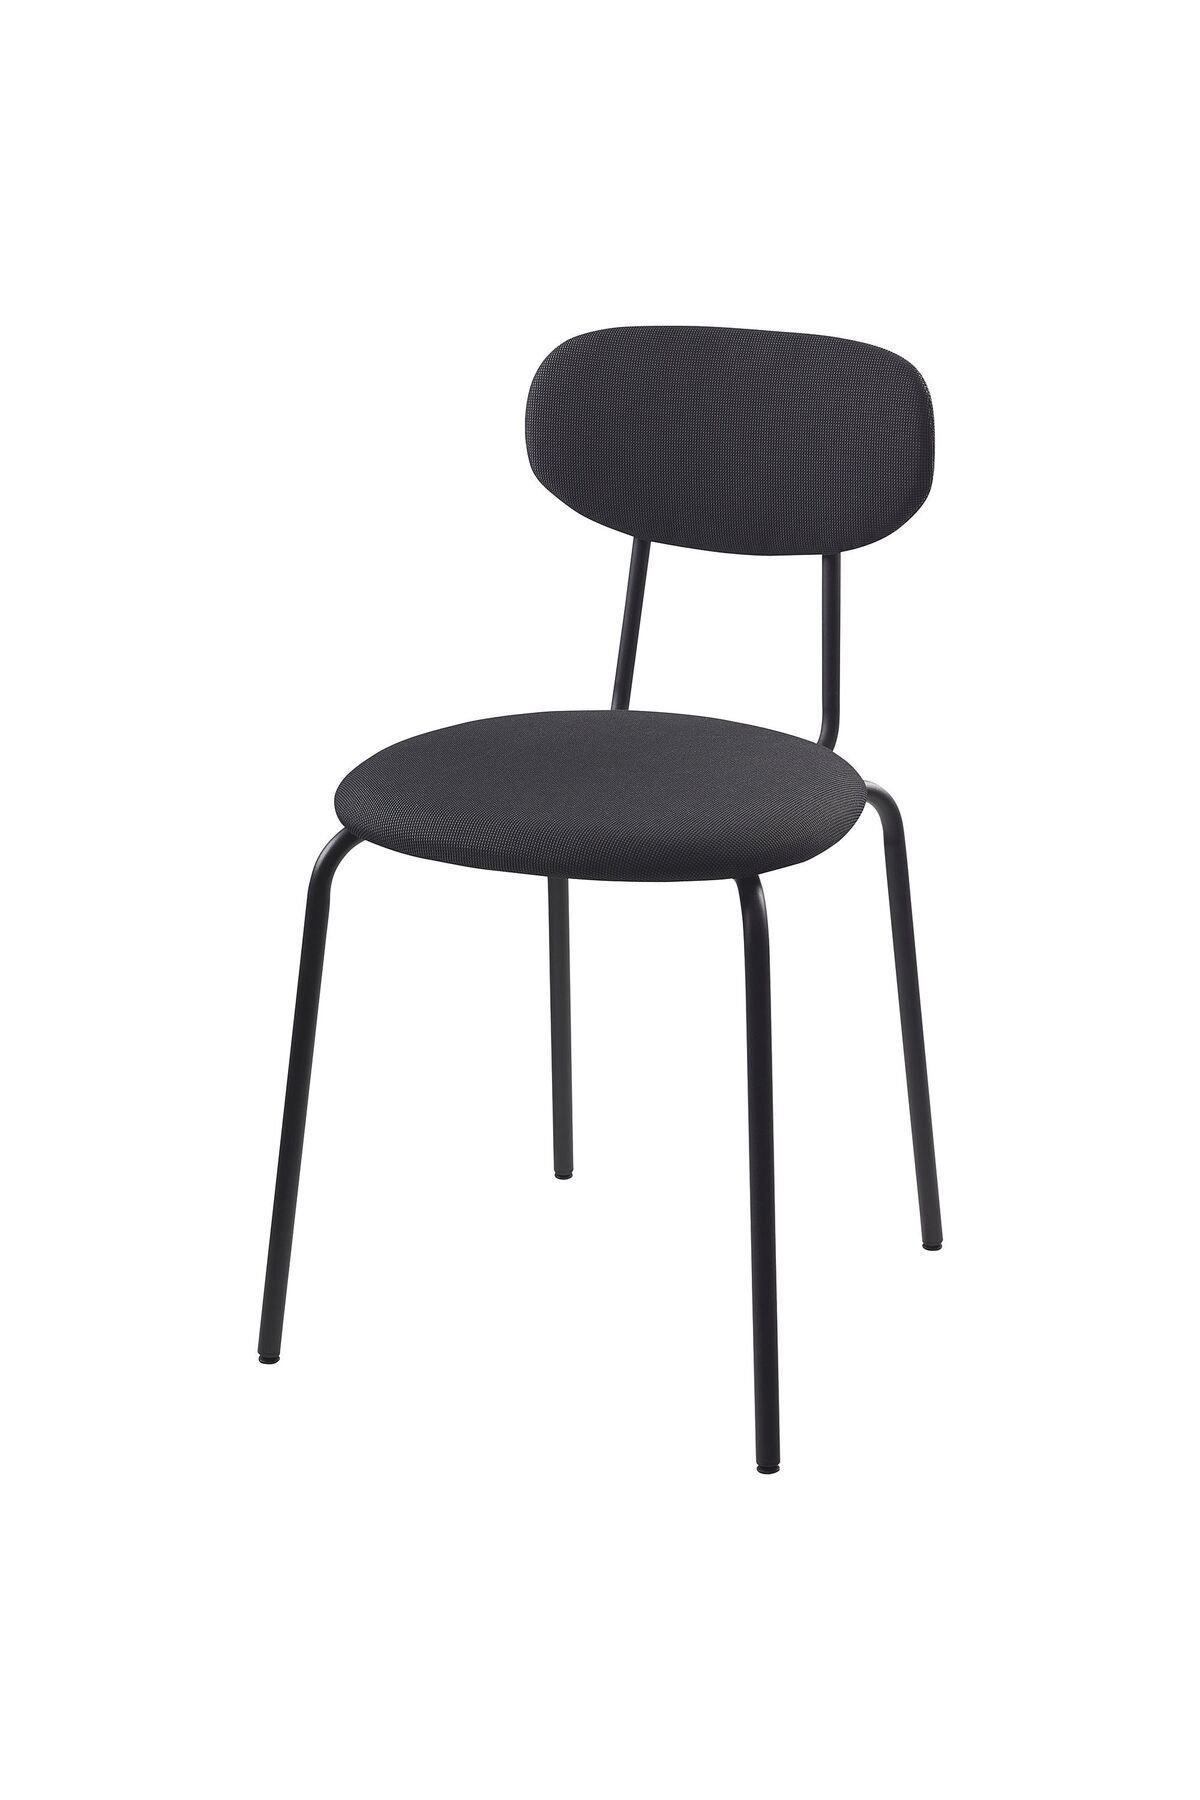 IKEA Modern ÖSTANÖ döşemeli sandalye, Remmarn siyah-koyu gri, Remmarn kırmızı-kahverengi 205.453.59 Siya